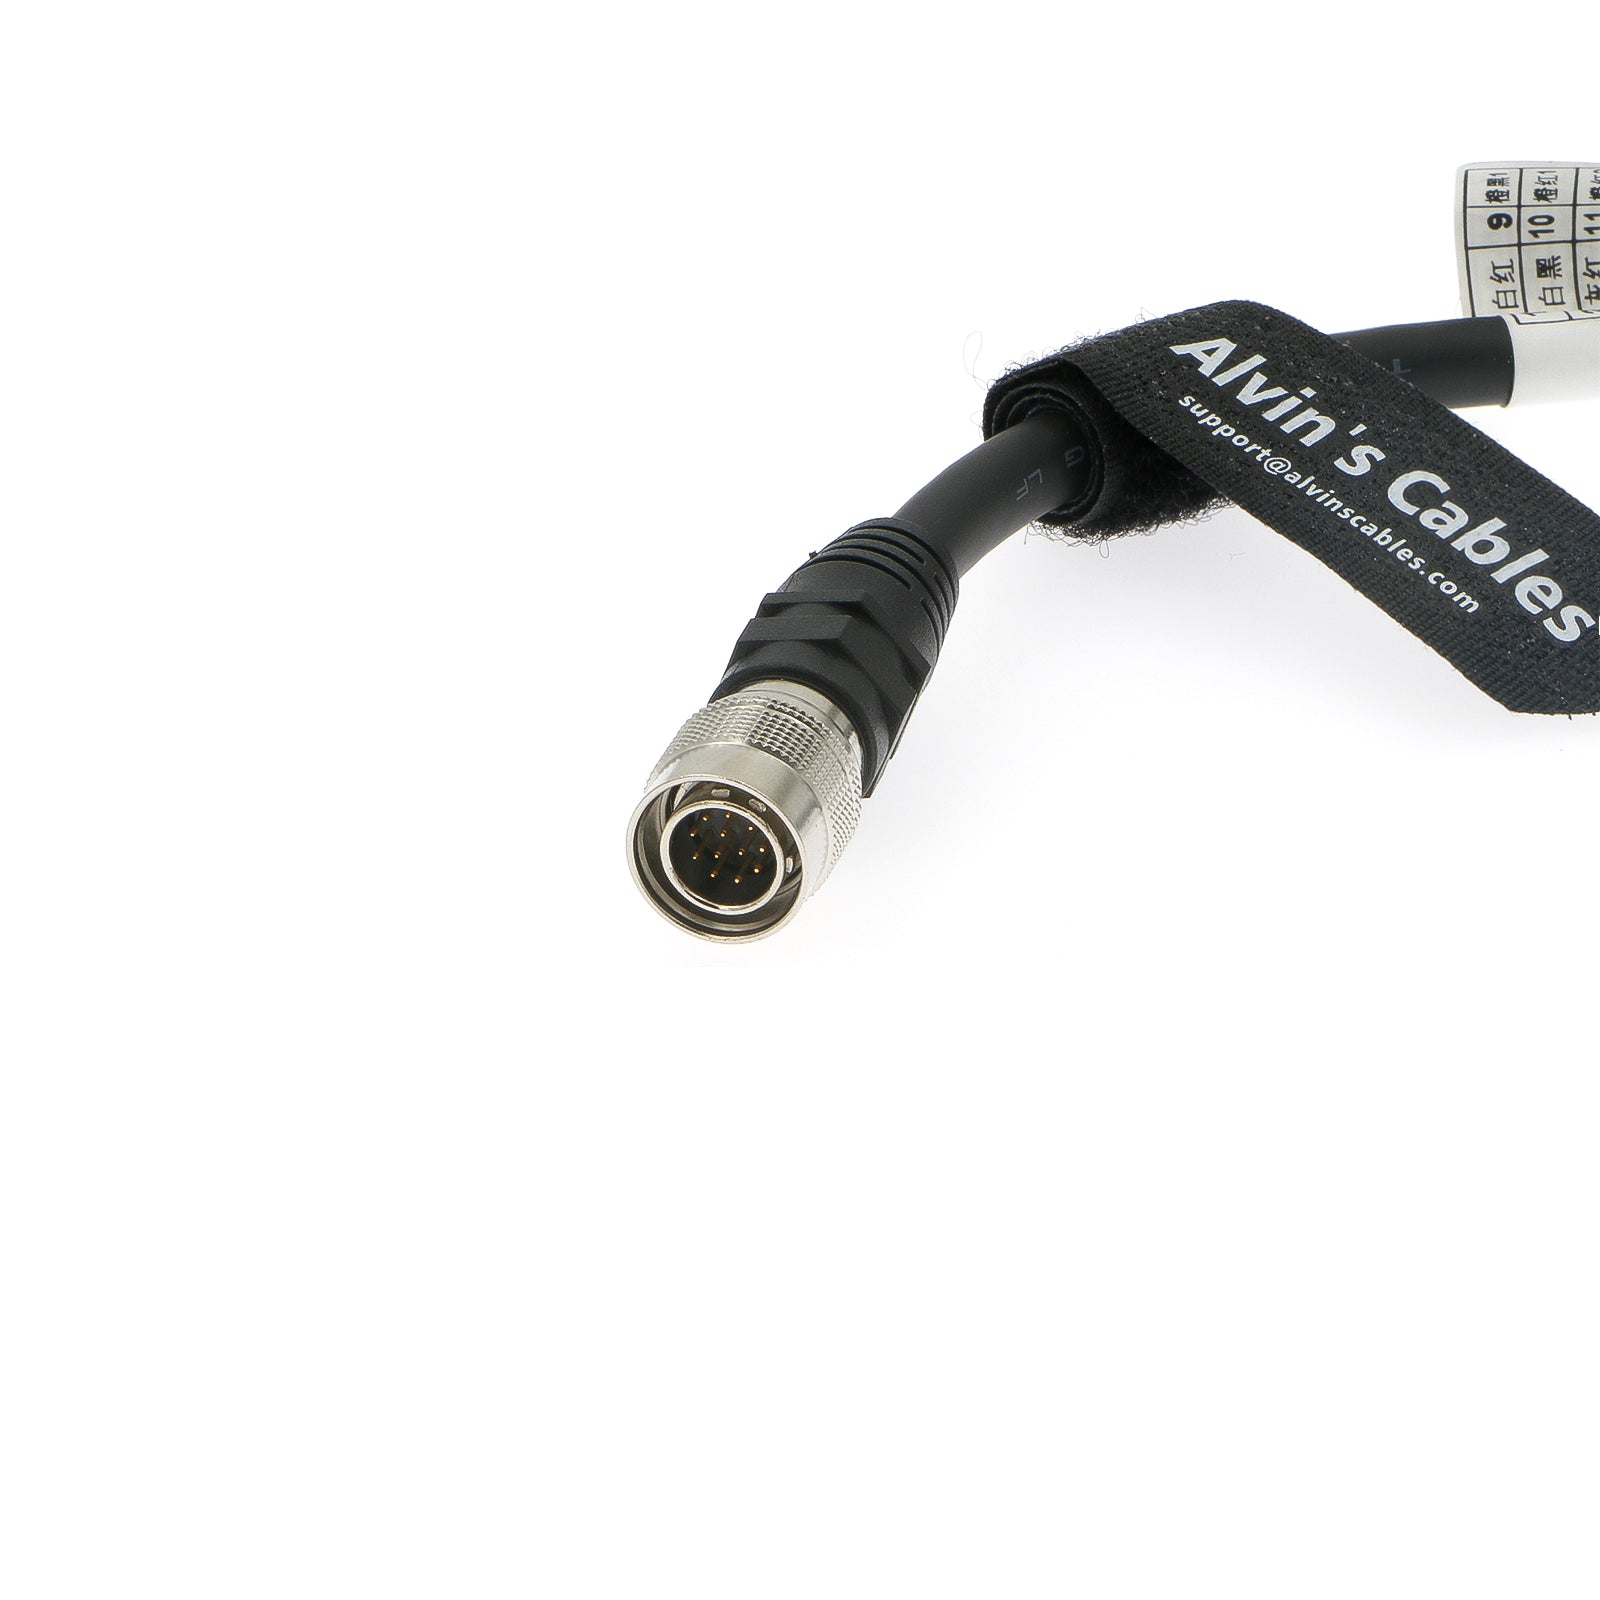 Alvin's Cables 12 Pin Hirose Male HR10A-10P-12P High Flex Power IO Kabel für Kamera 1M